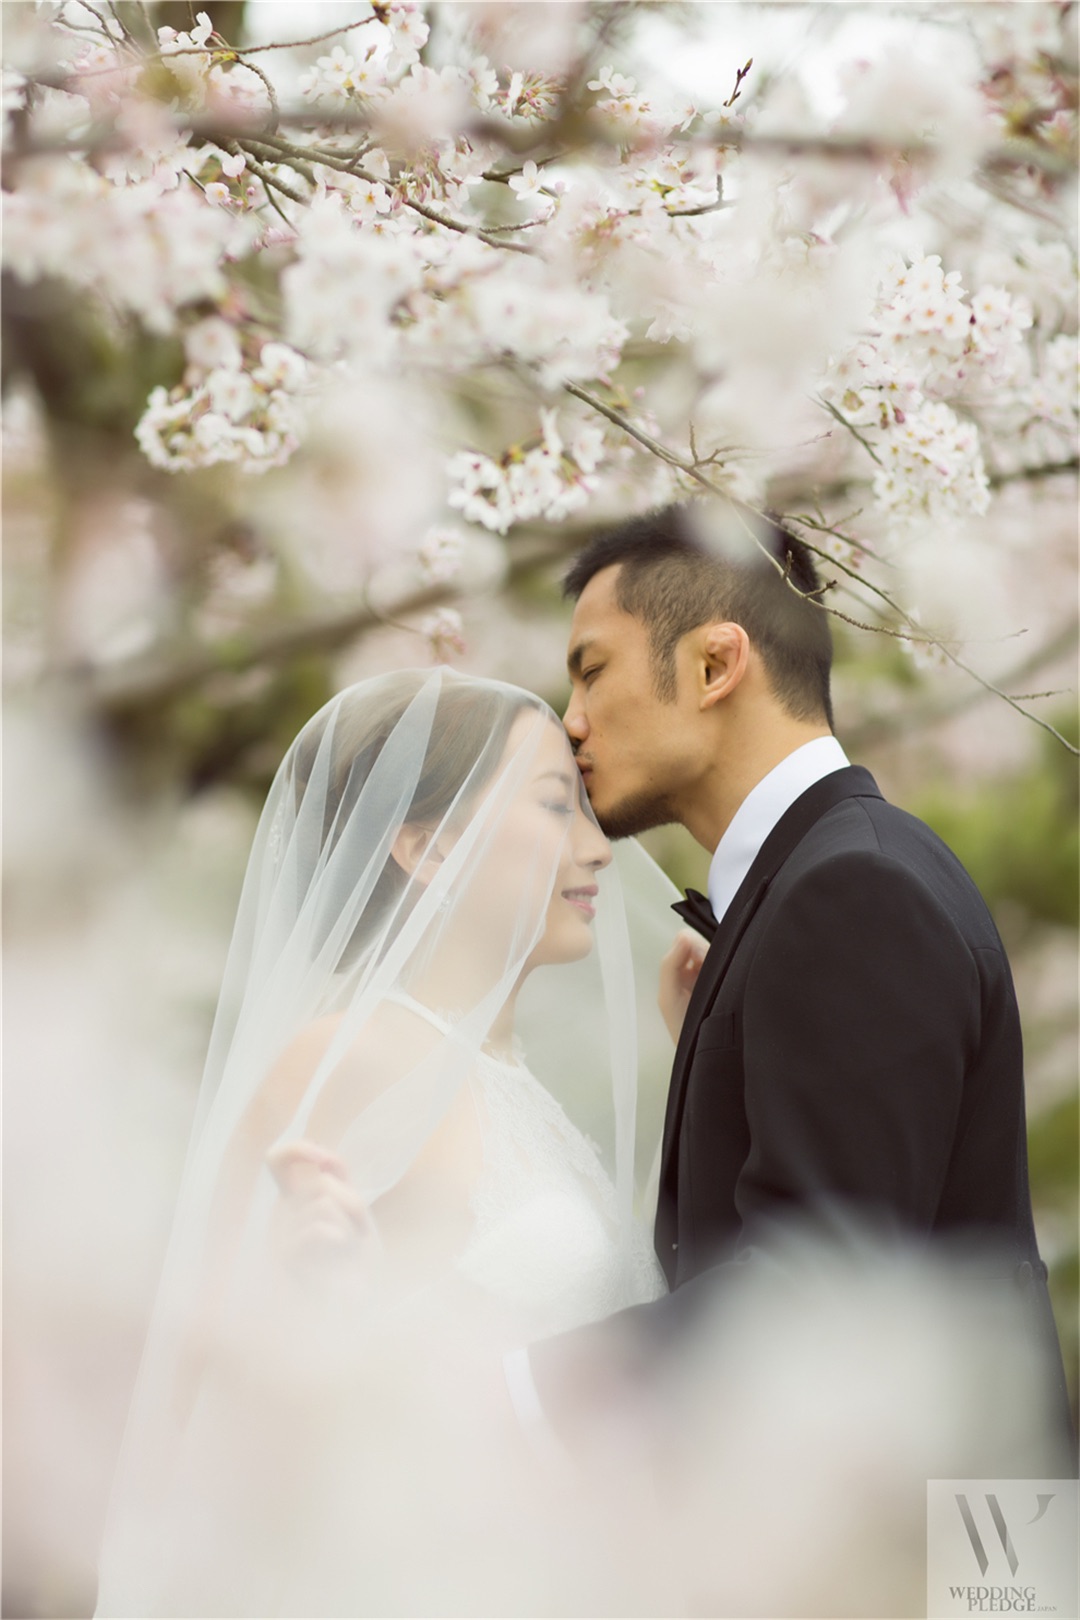 Korea/Japan Pre-wedding package | Blissful Brides: Wedding Banquet, Bands, Venues, Dresses ...